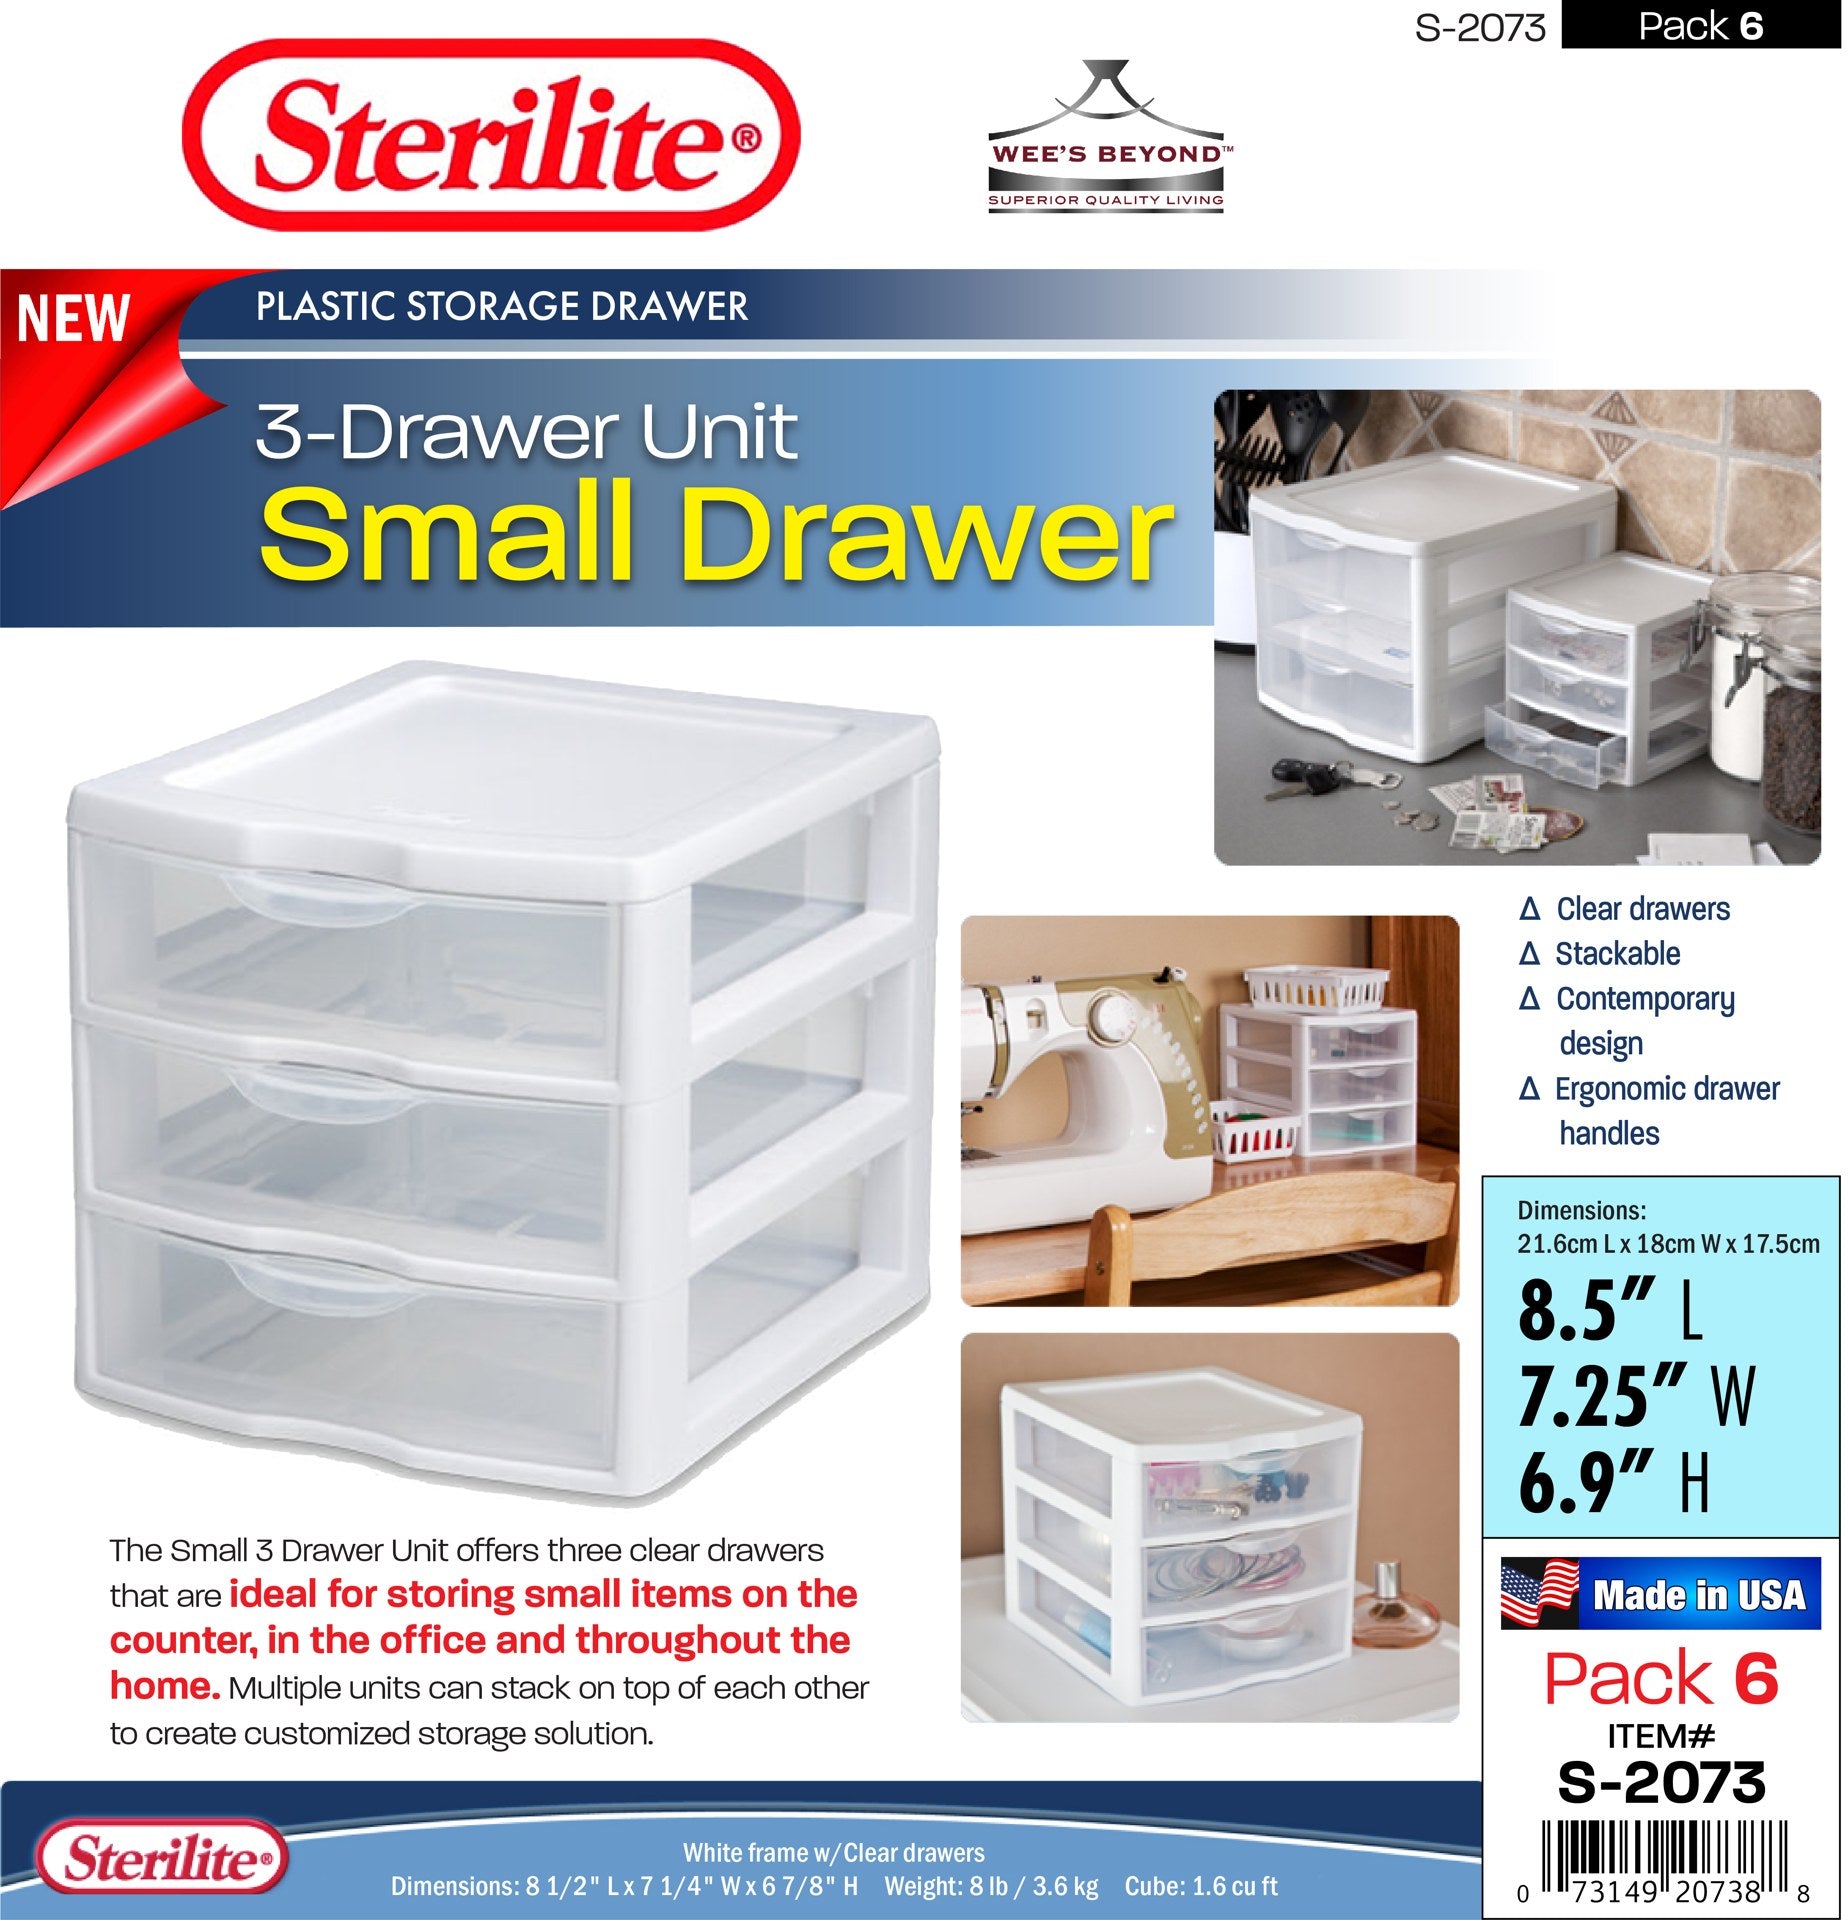 S 2073 Sterilite Plastic Small 3 Drawer Unit Case Pack 6 Pcs